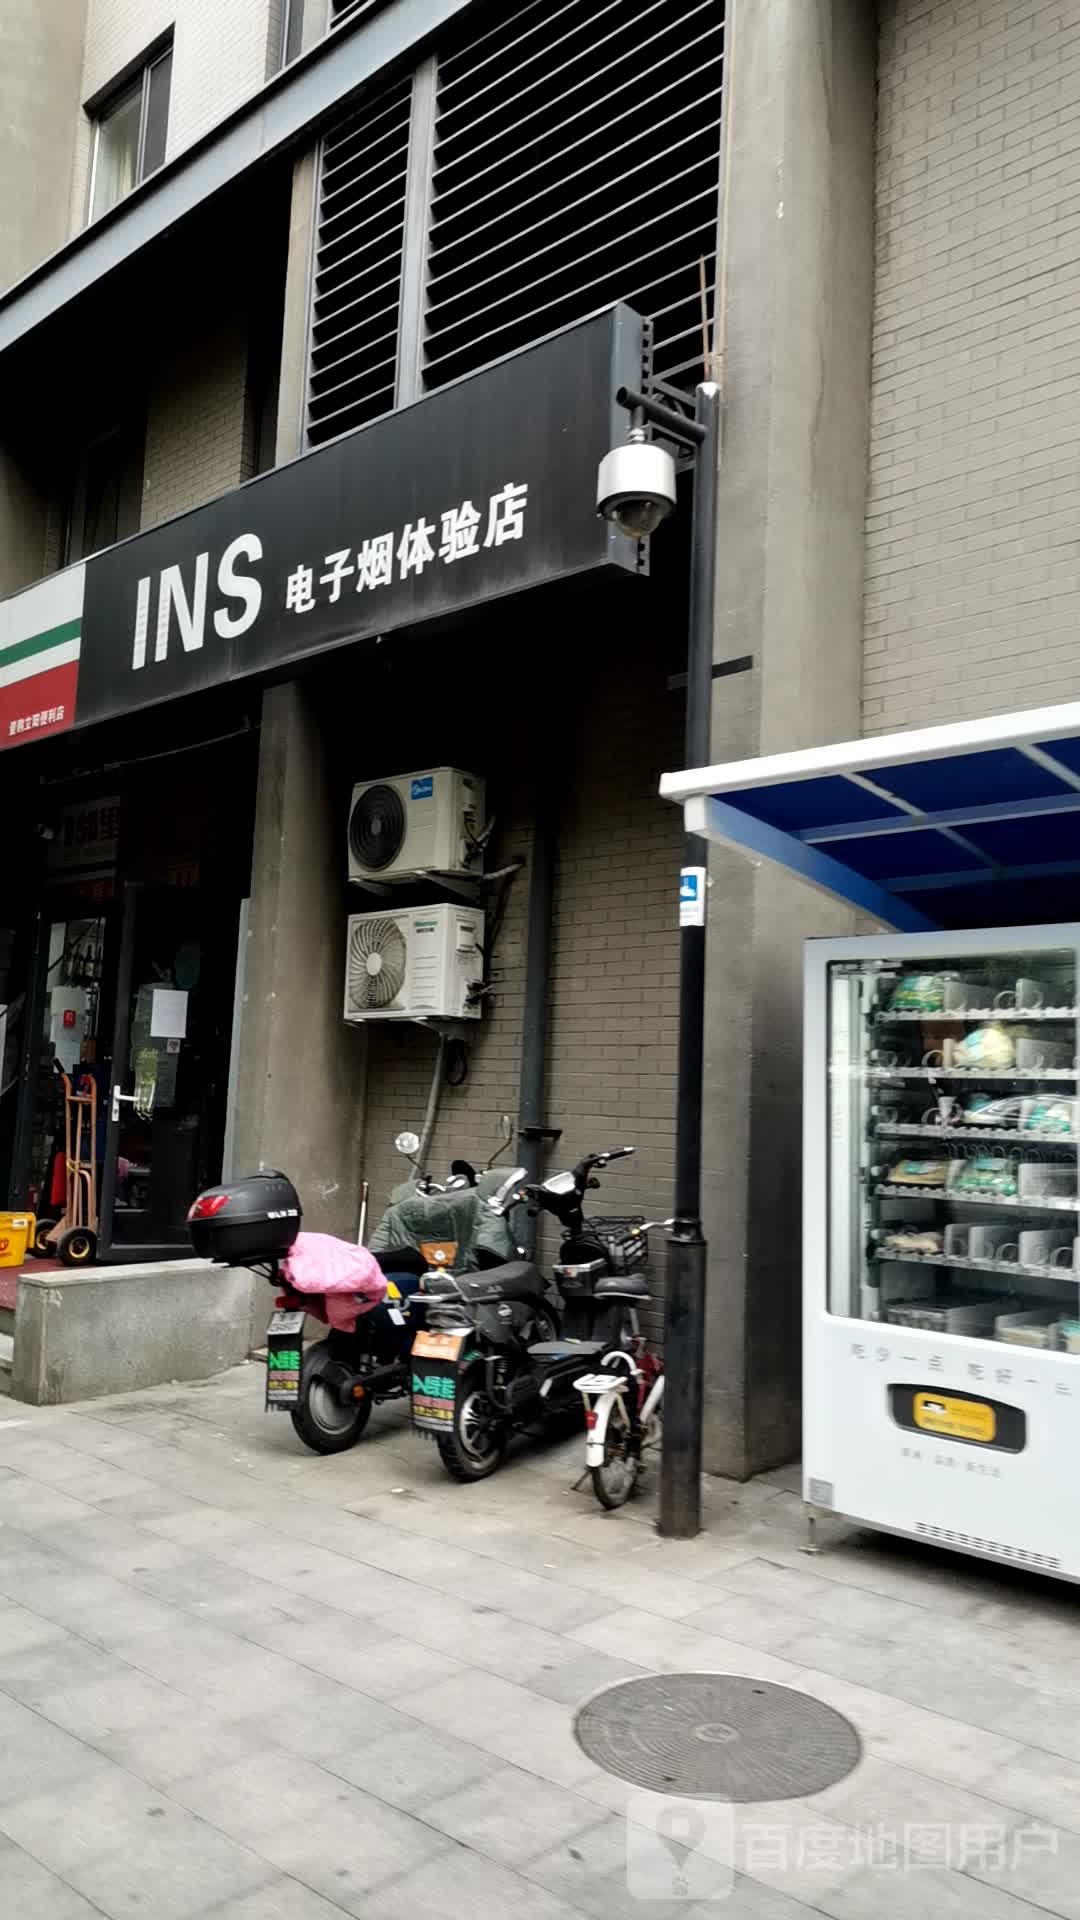 INS电子烟体验店